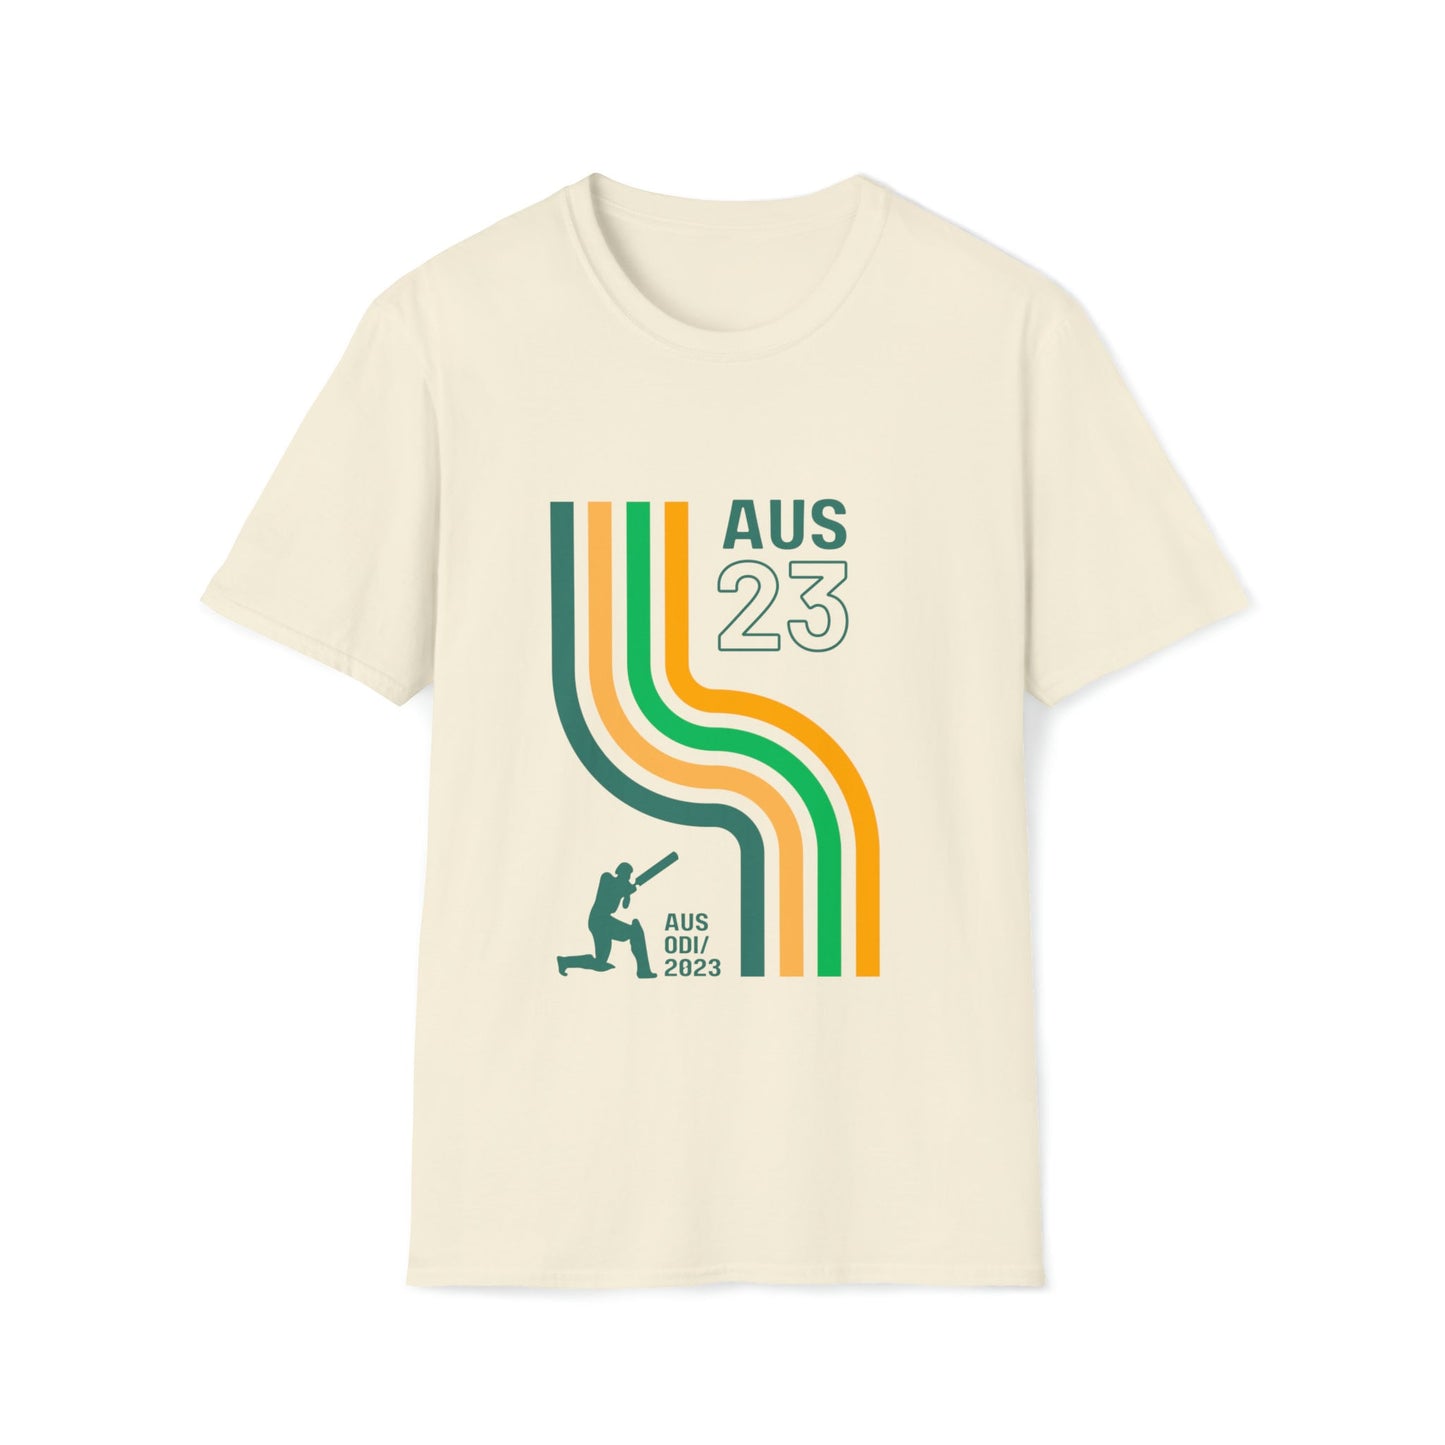 Australia Cricket World Cup T-Shirt 2023 Australian Cricket T-Shirt Cricket Australia TShirt Aussie Cricket Shirt ODI Australian Cricket